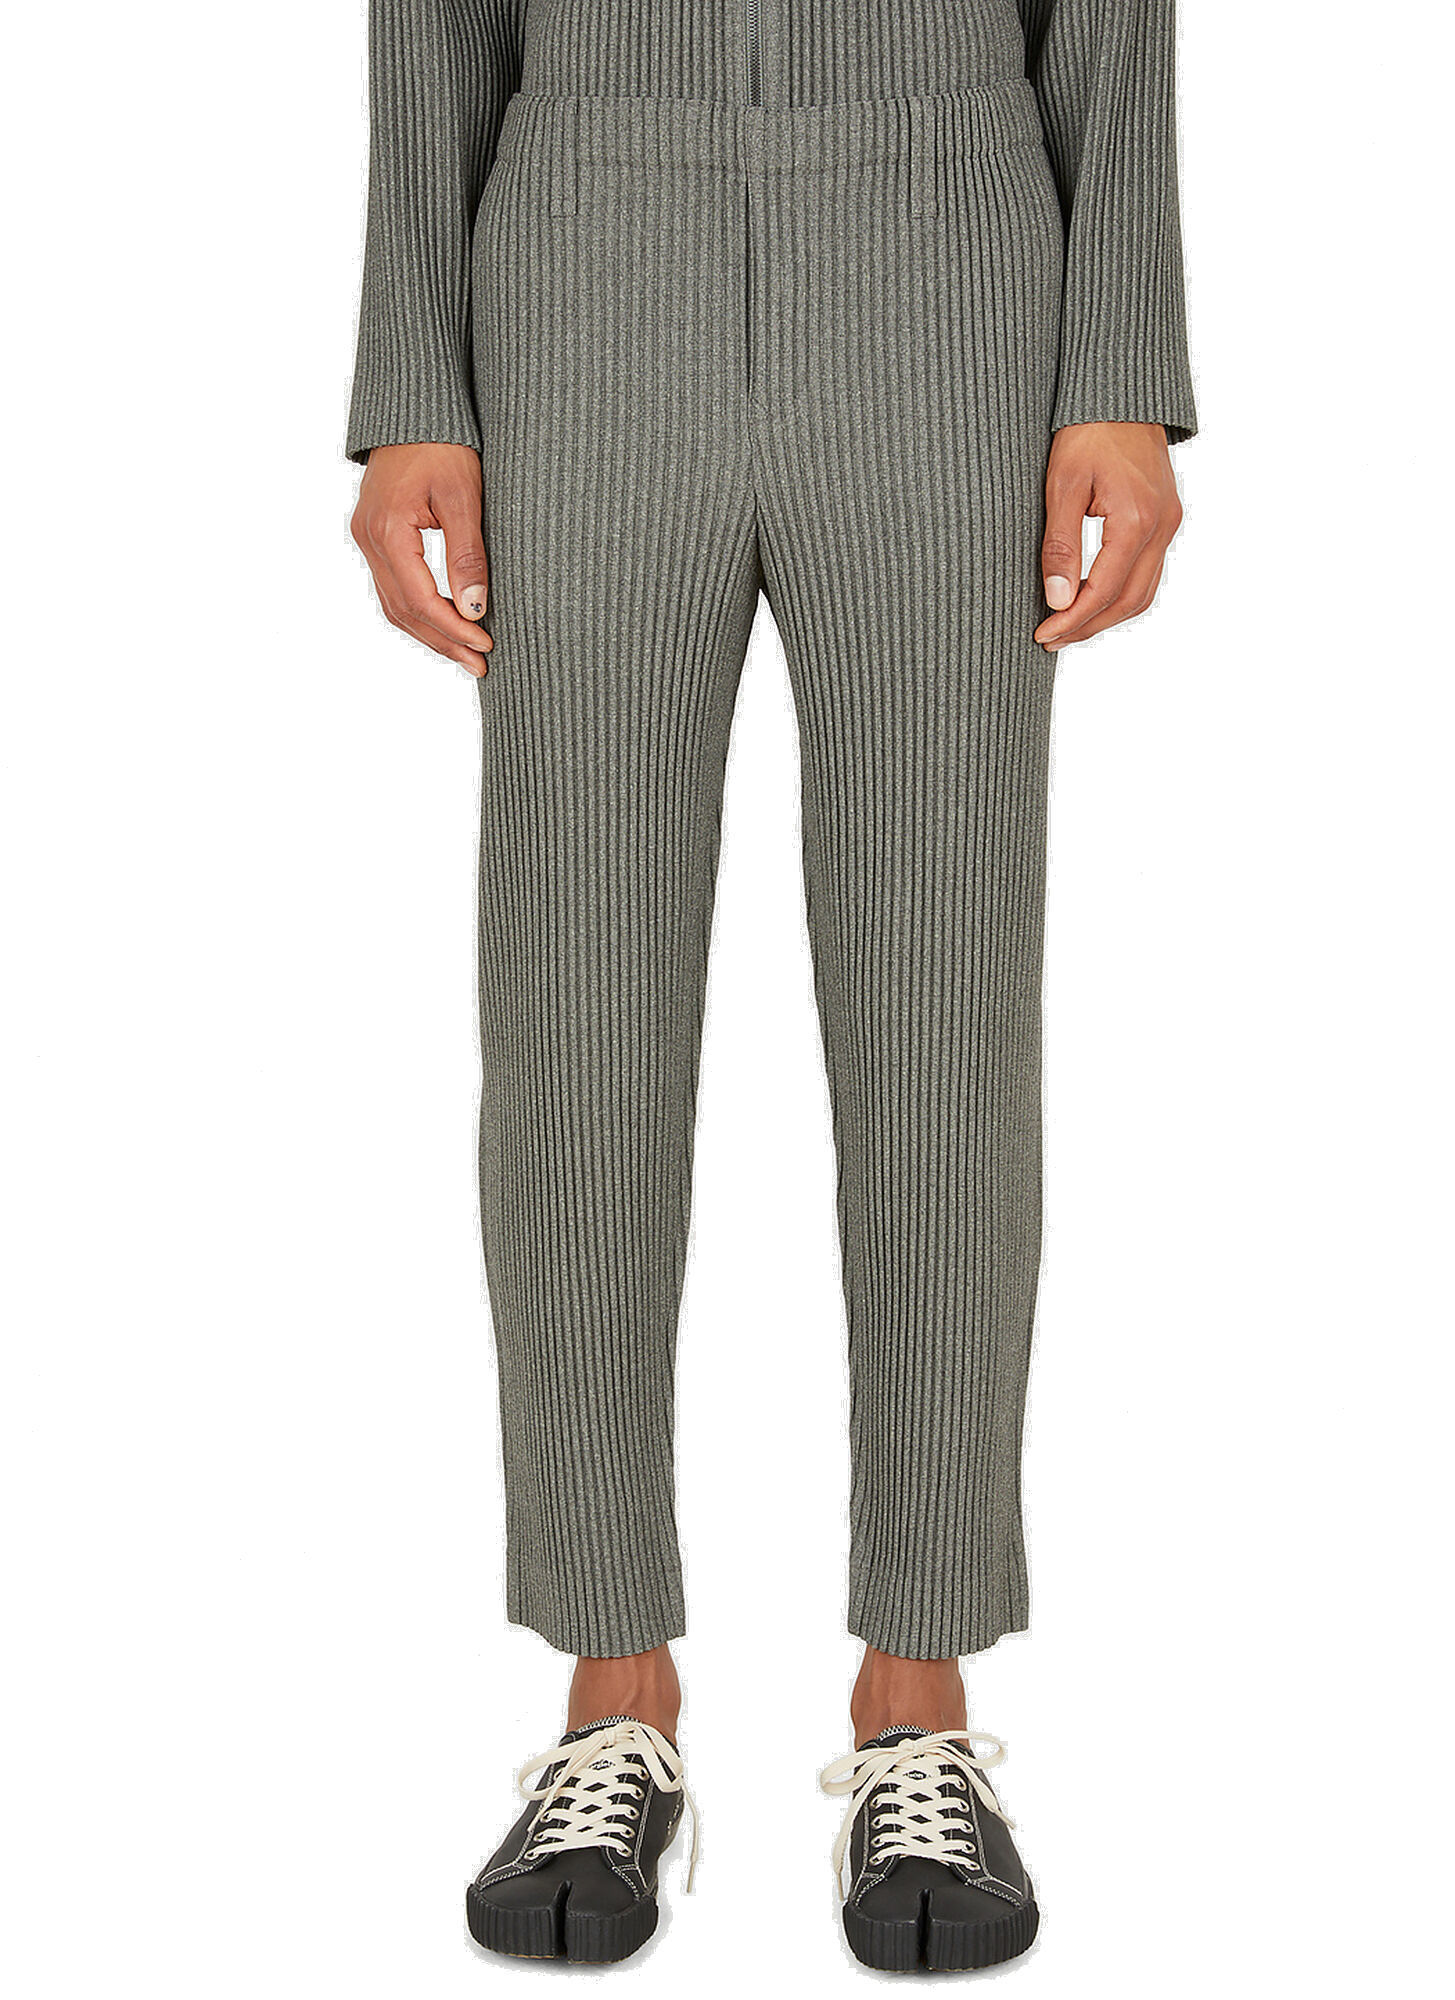 Wool Like Light Tapered Pants in Grey Homme Plisse Issey Miyake